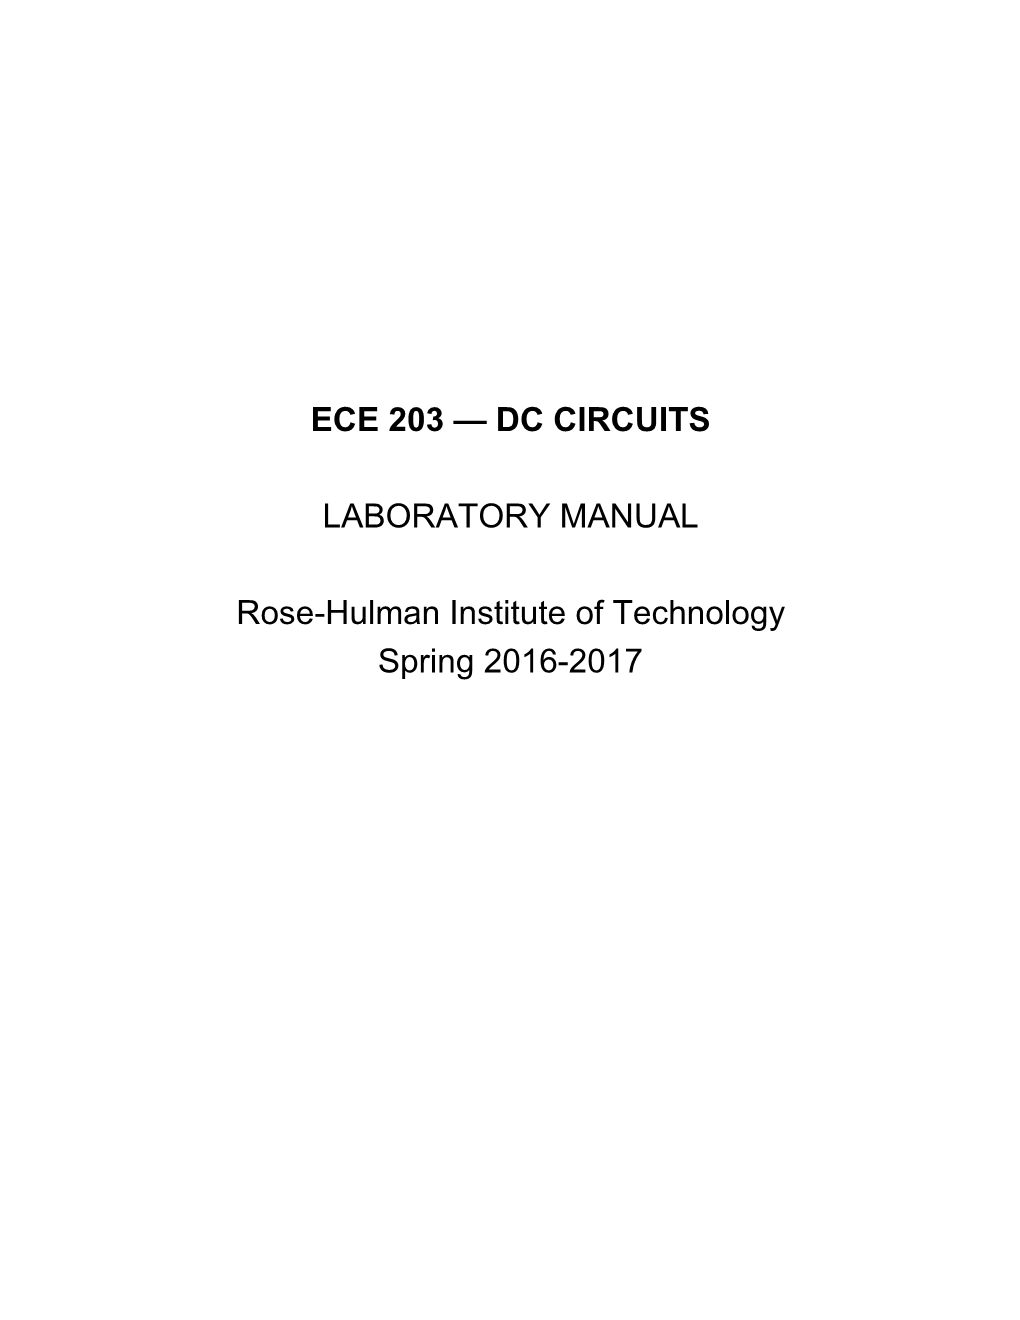 ECE203 Lab Manual